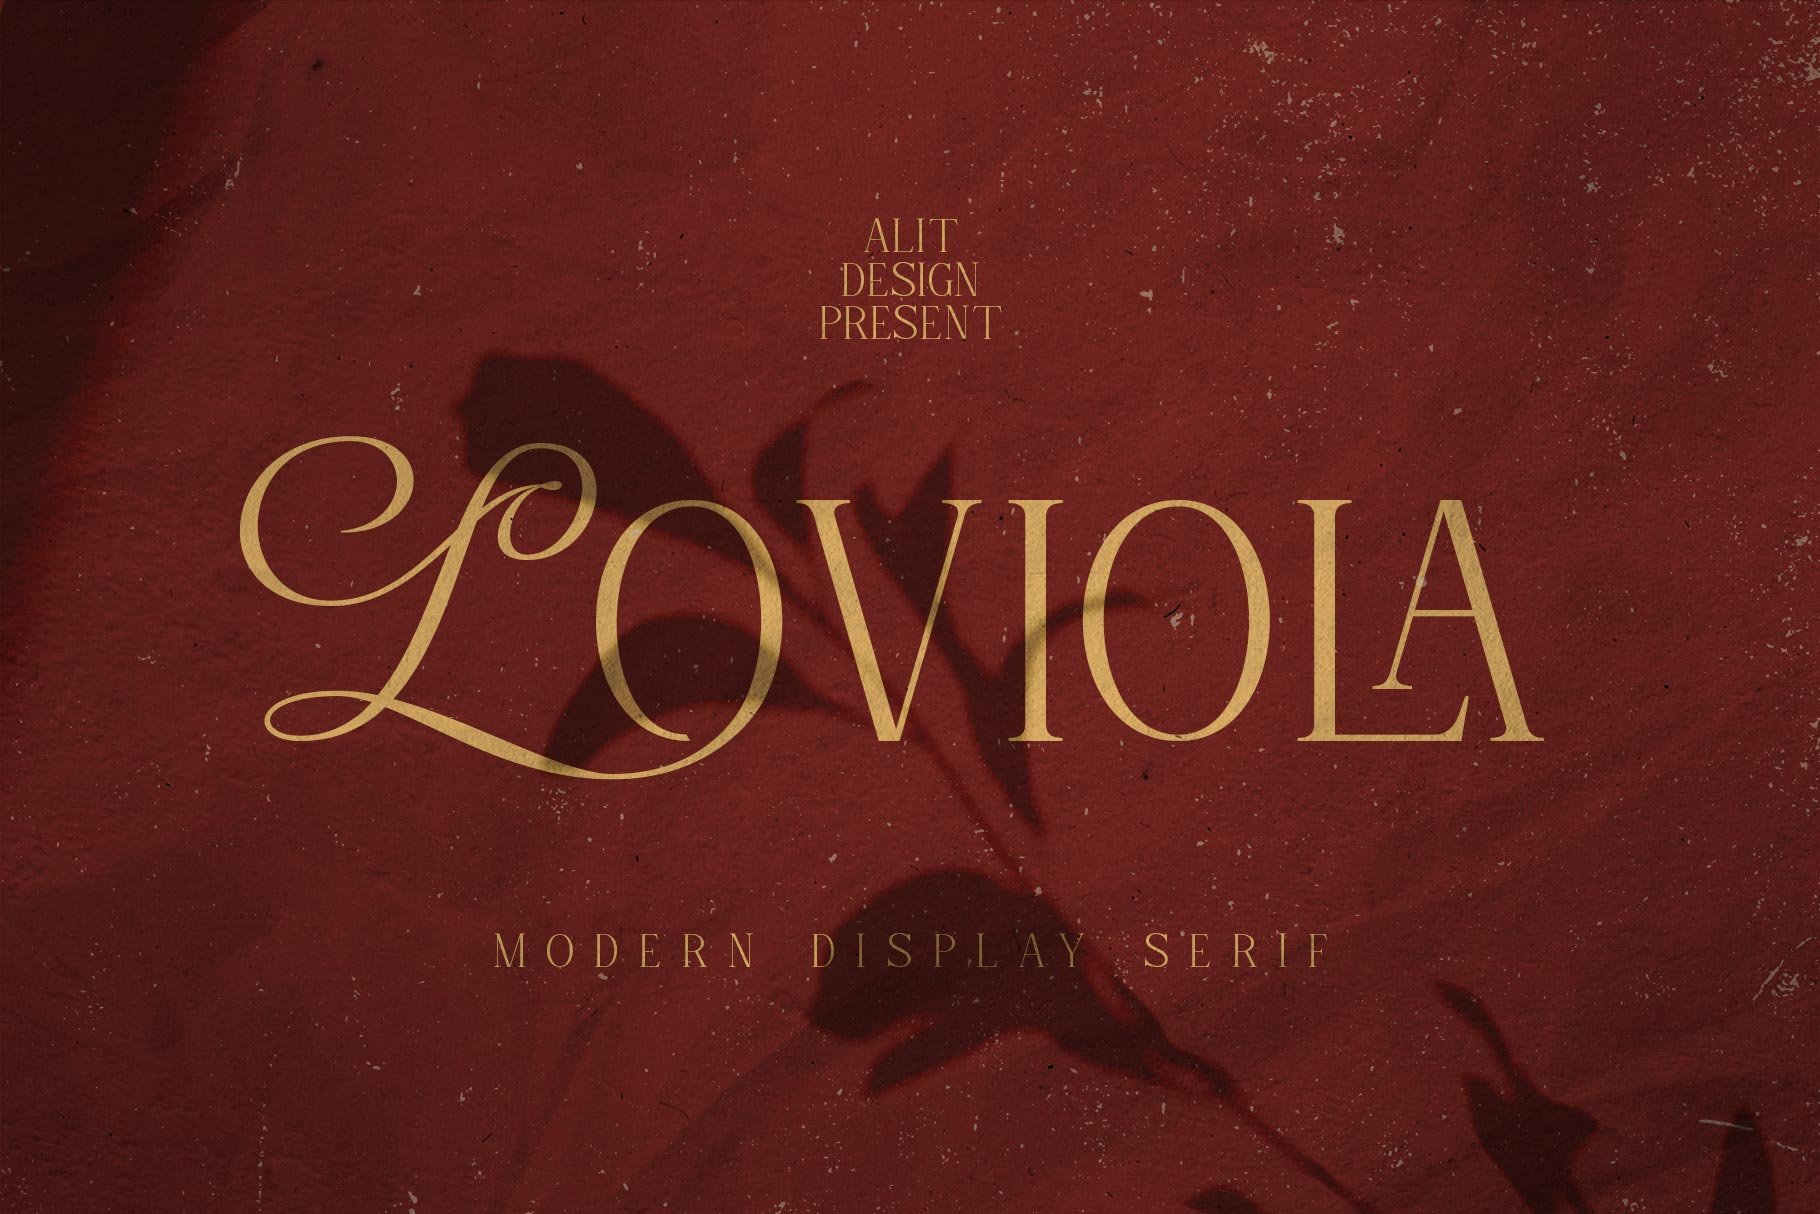 Loviola Typeface cover image.